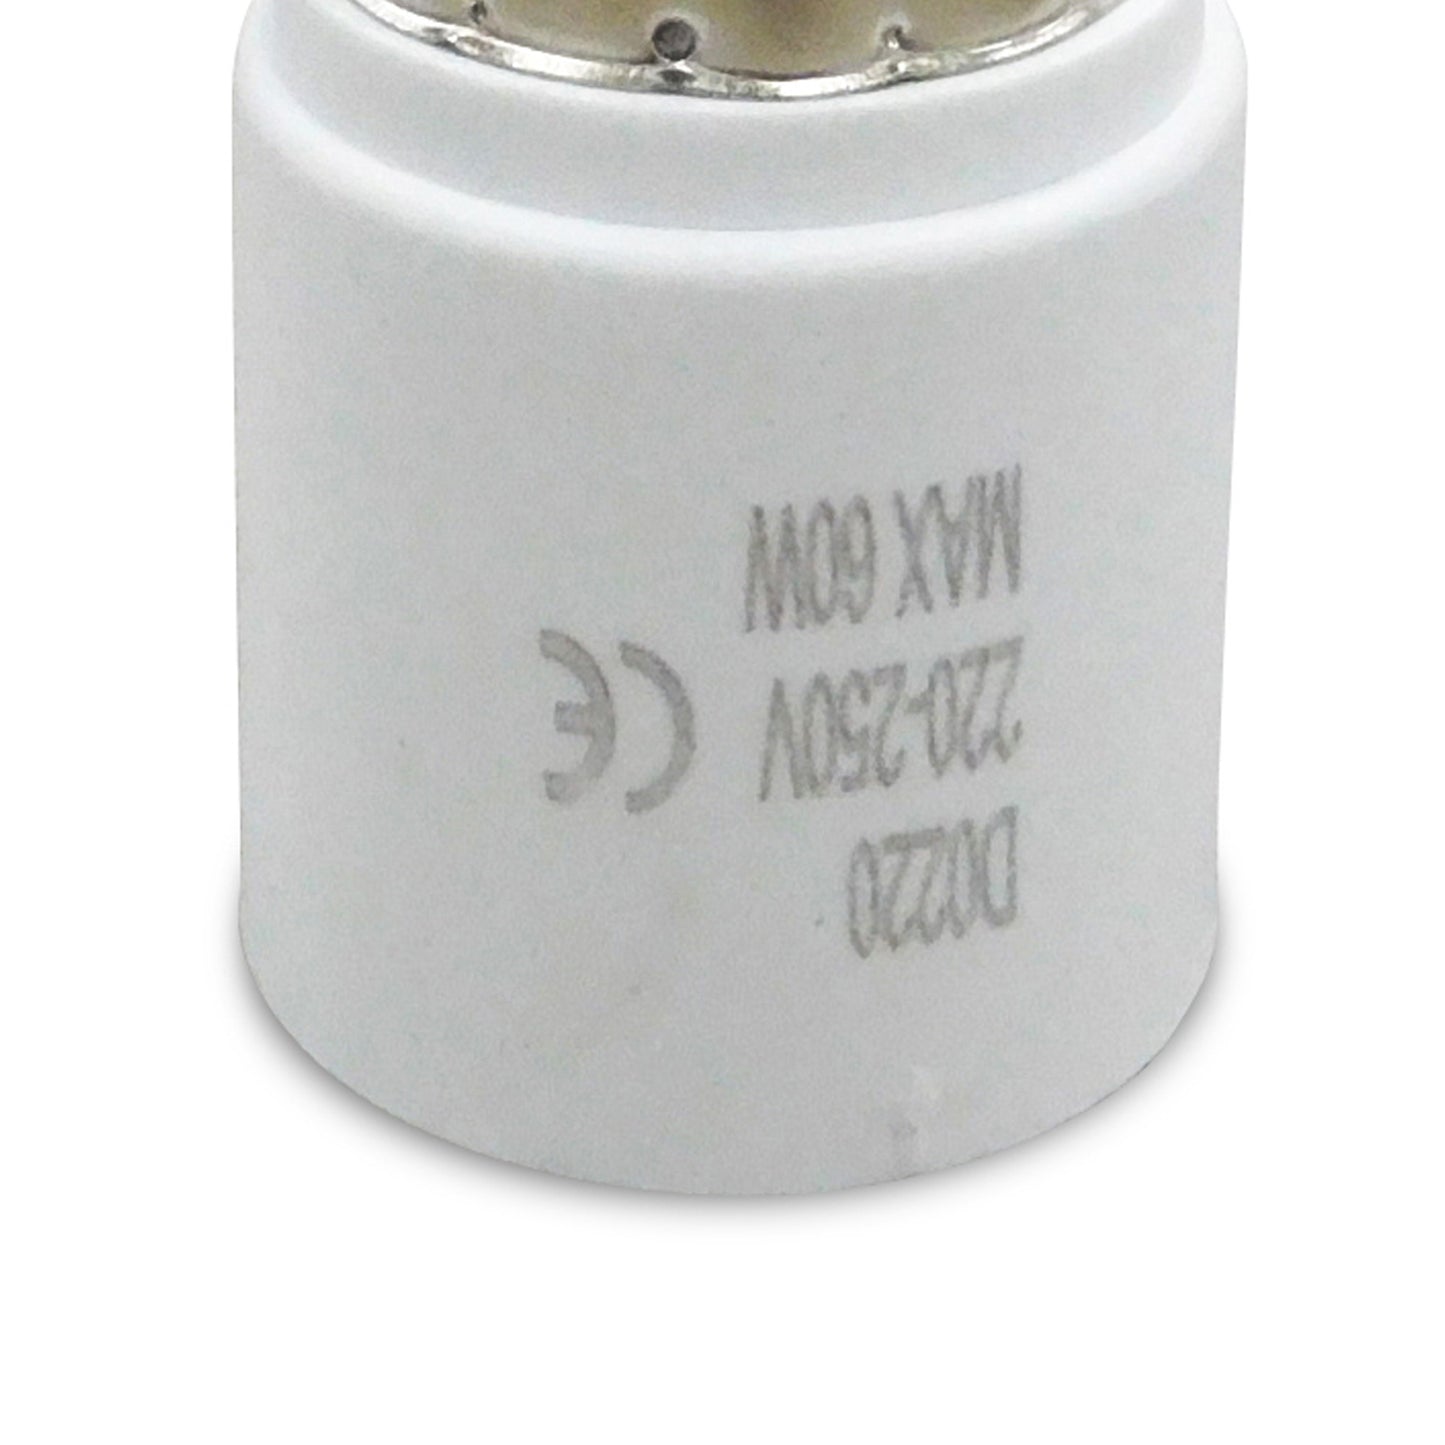 B22 Lampholder to E27 Lamp Socket Converter